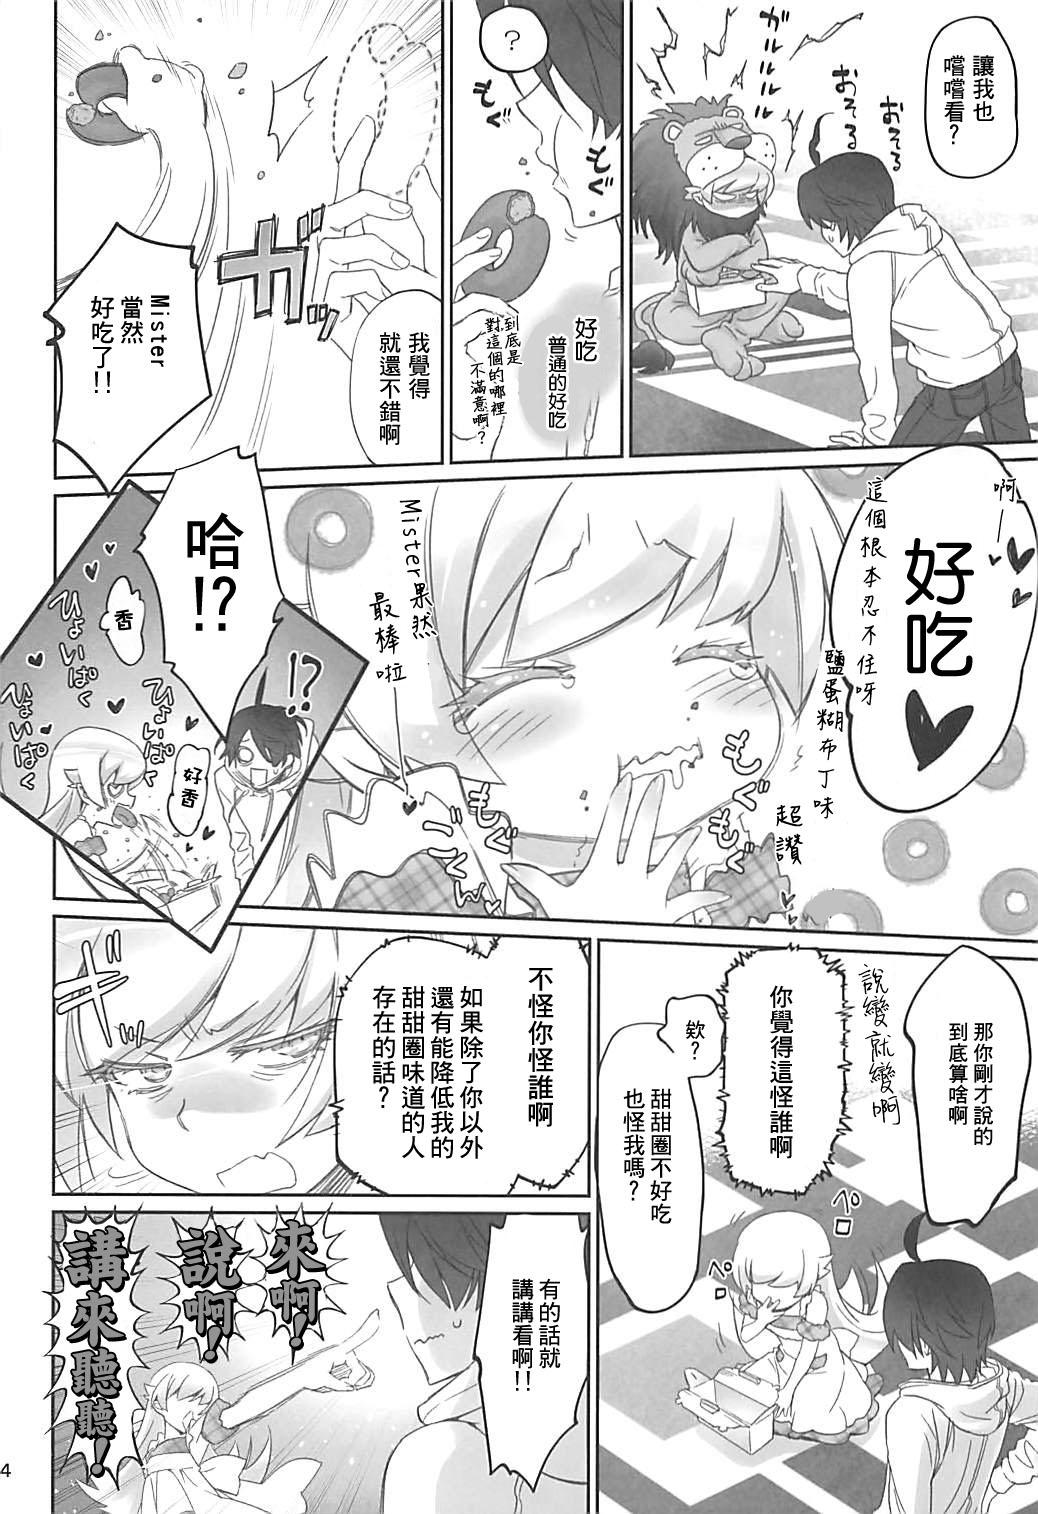 Gostoso Shinobu Appetite 丨 忍的食欲 - Bakemonogatari 3some - Page 4